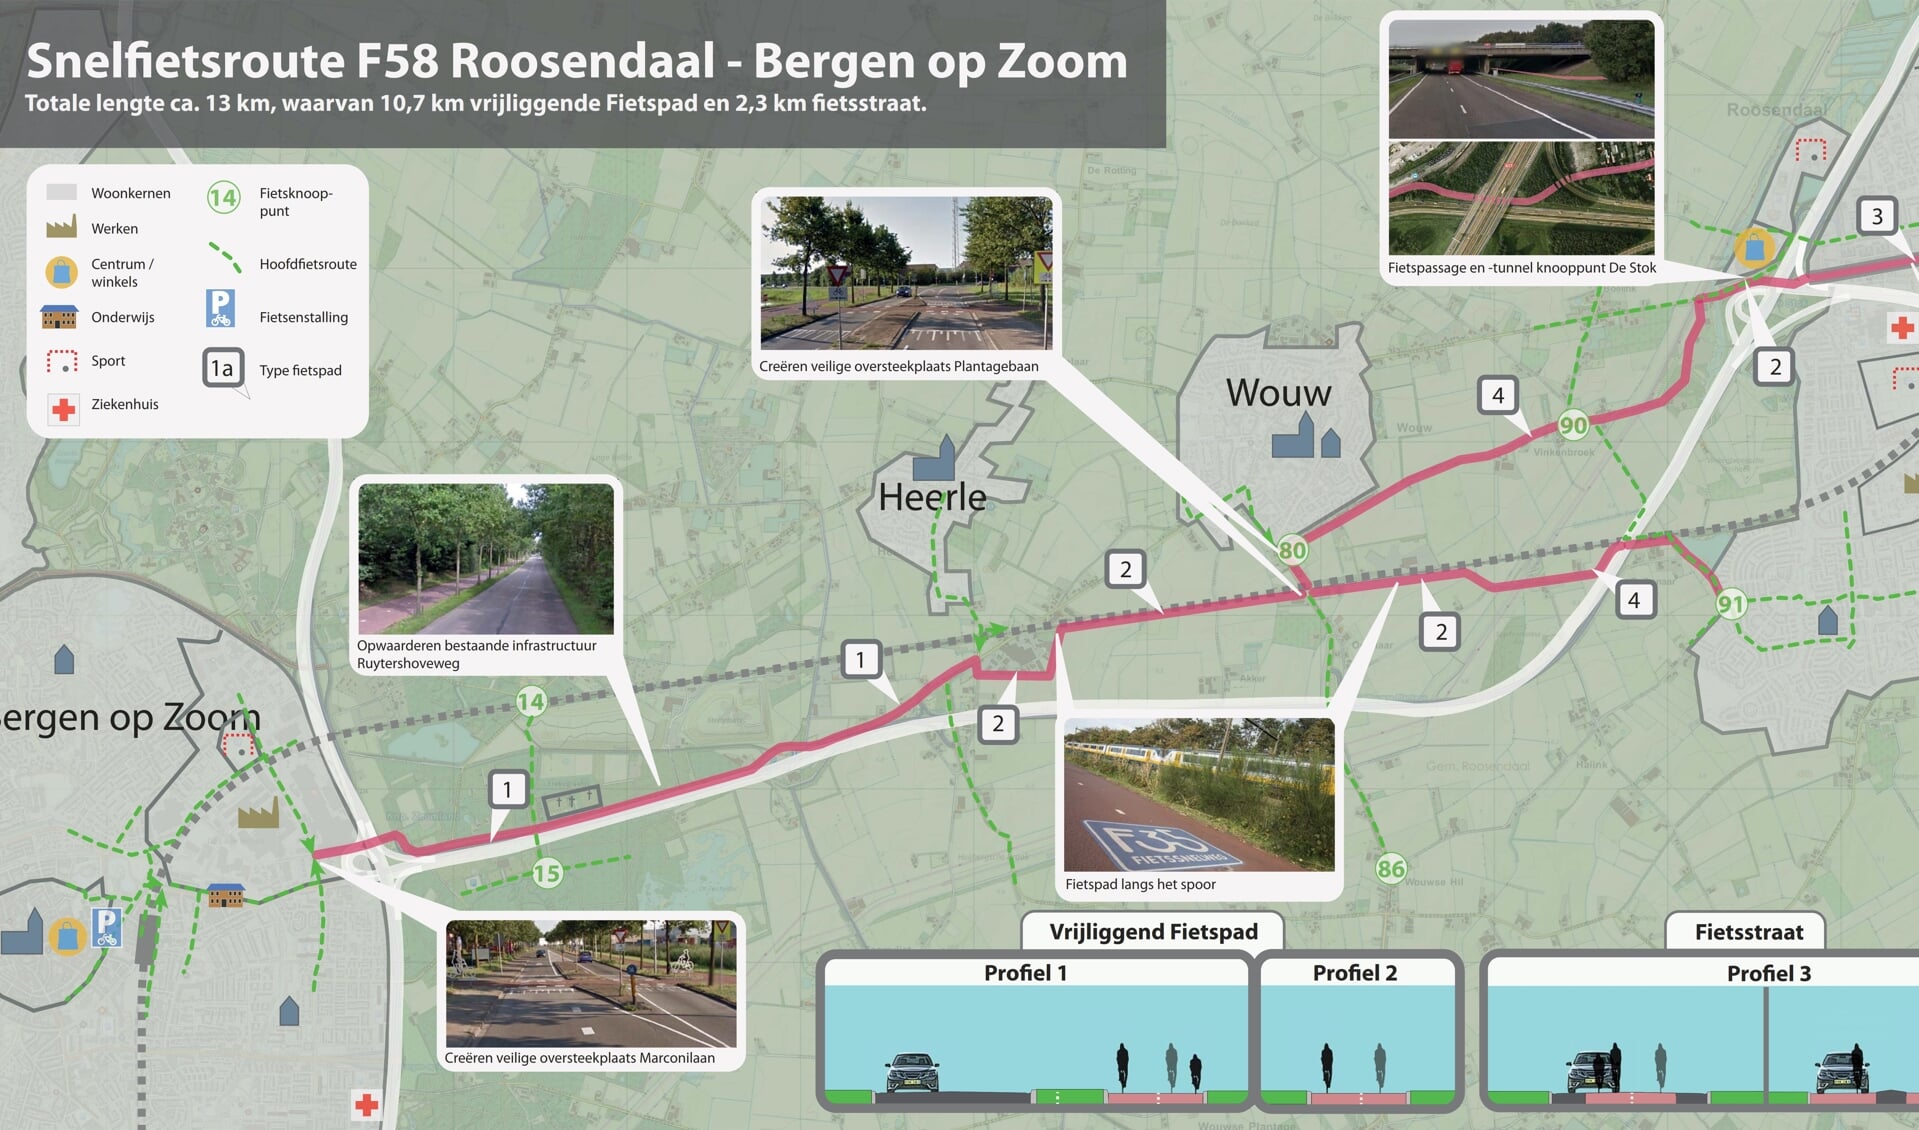 Snelfietsroute F58 tussen Bergen op Zoom en Roosendaal is in aanleg.